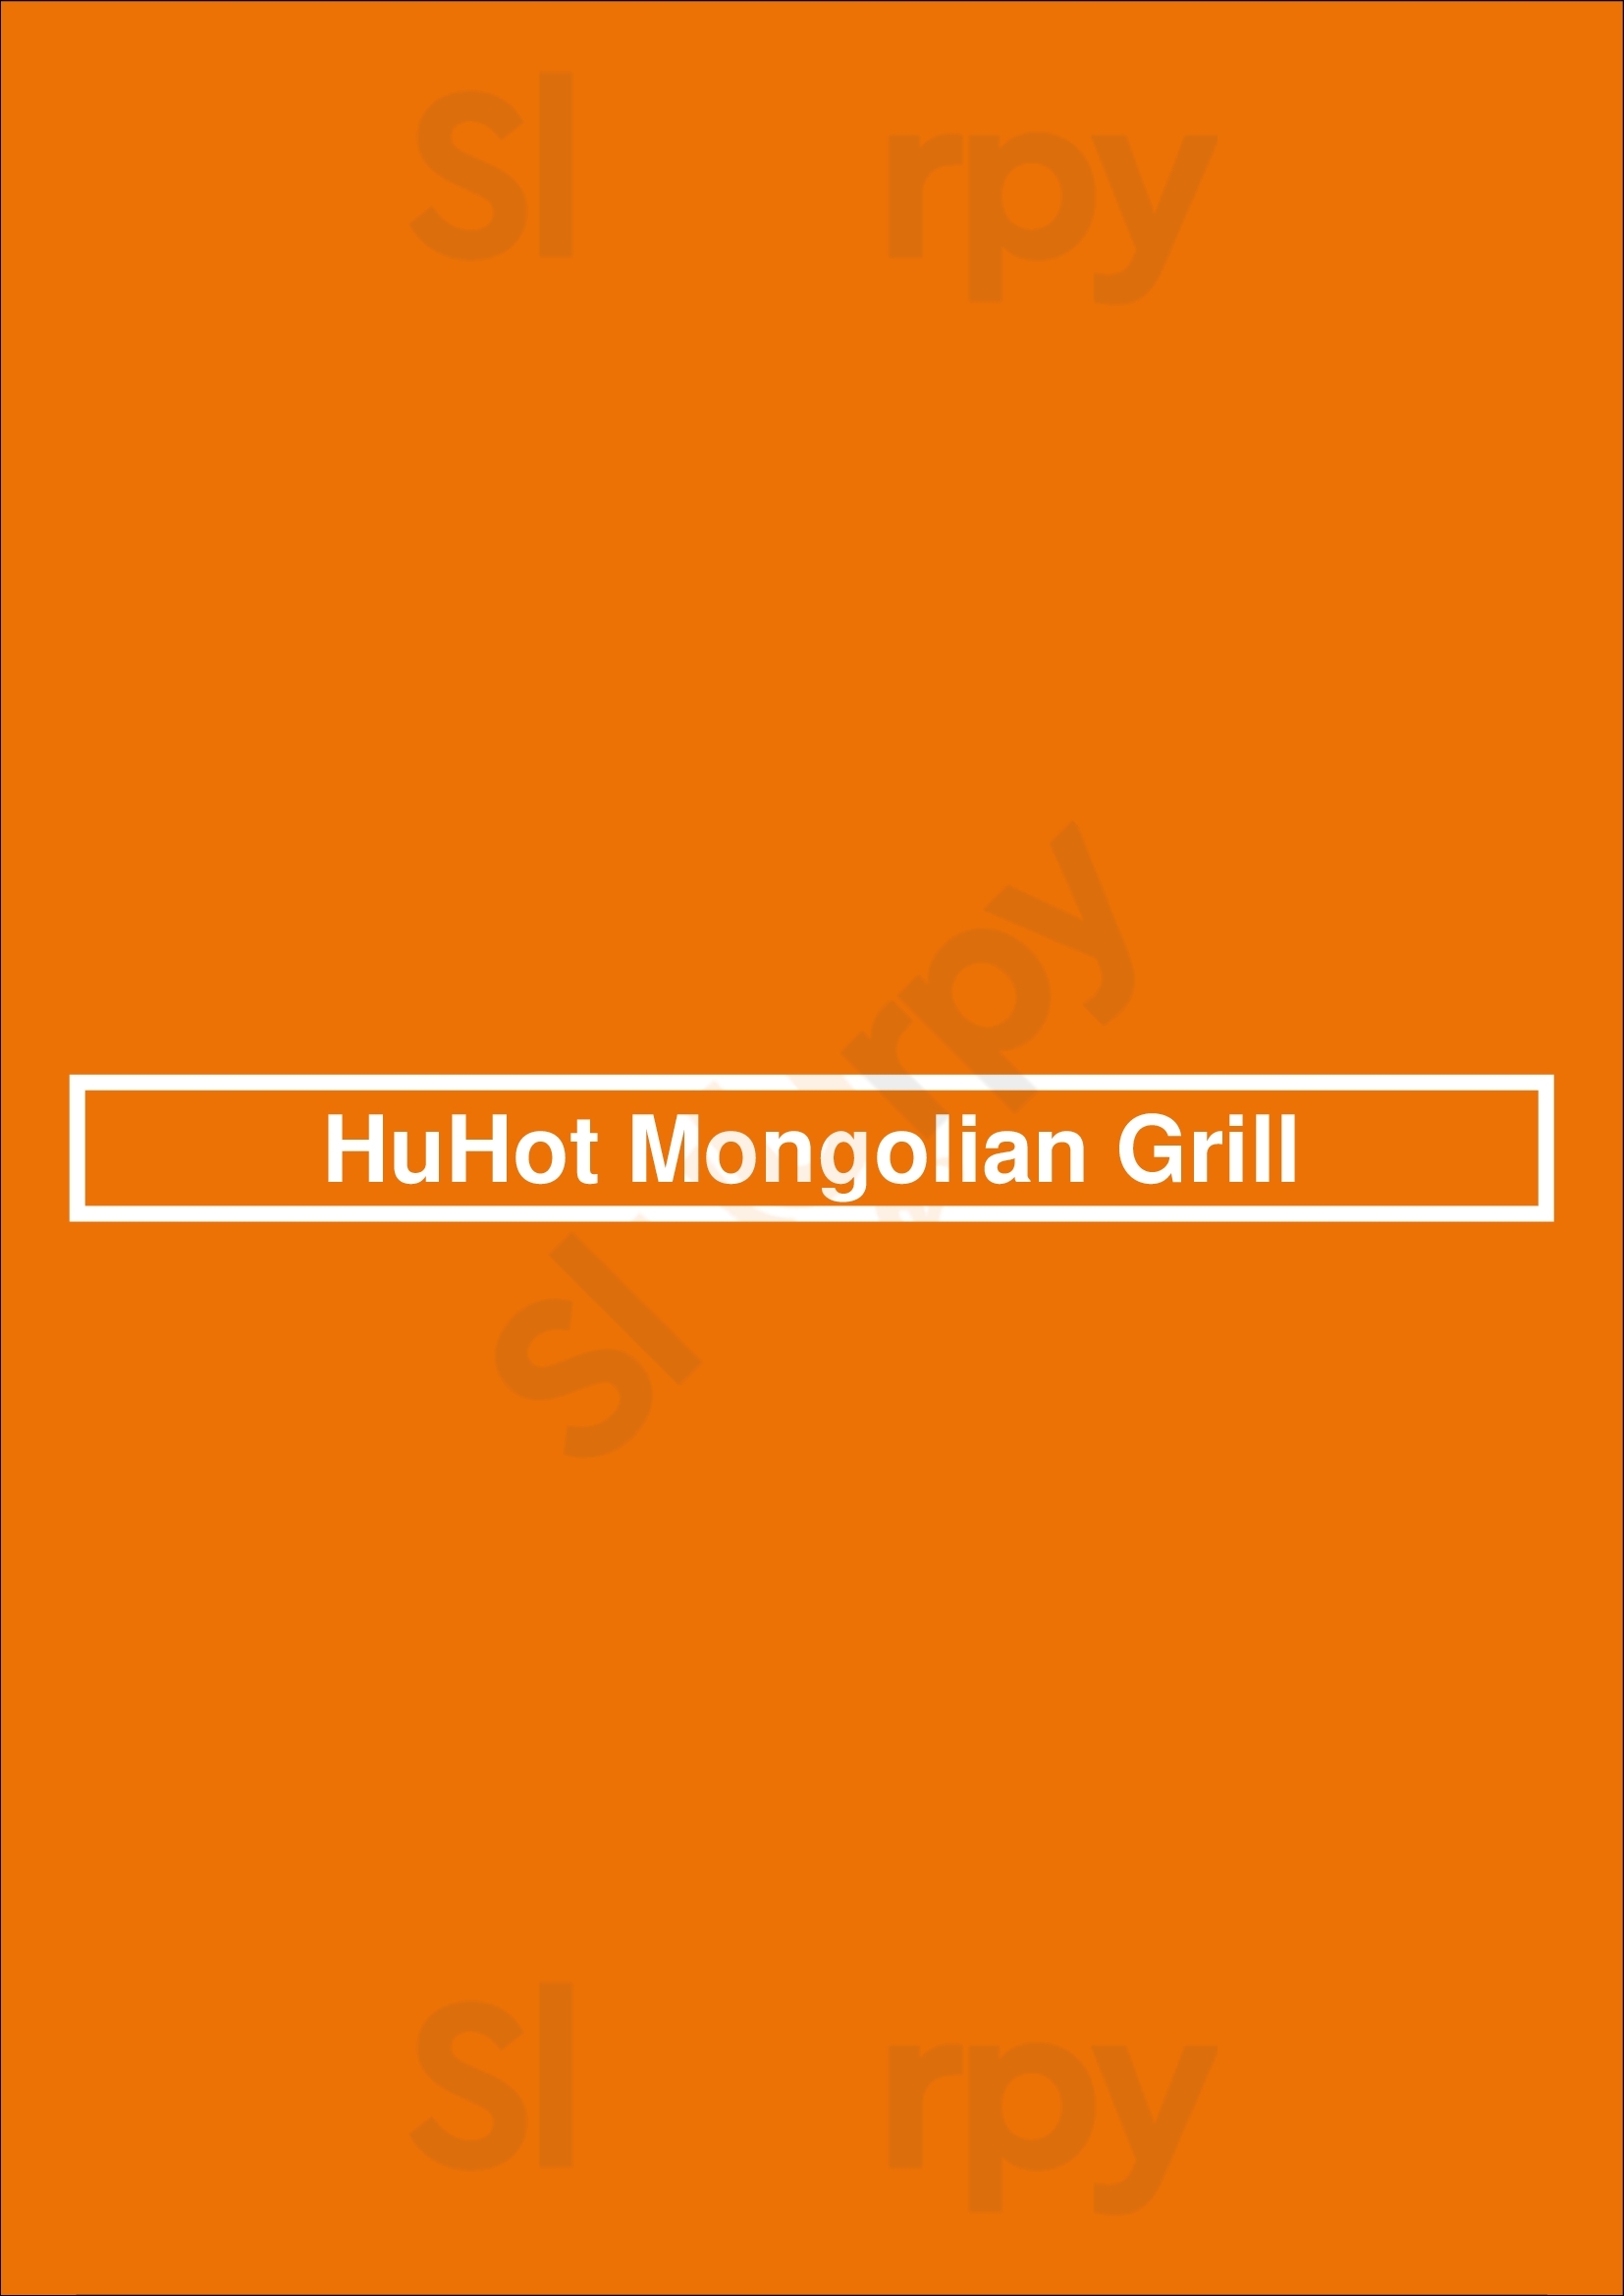 Huhot Mongolian Grill San Antonio Menu - 1